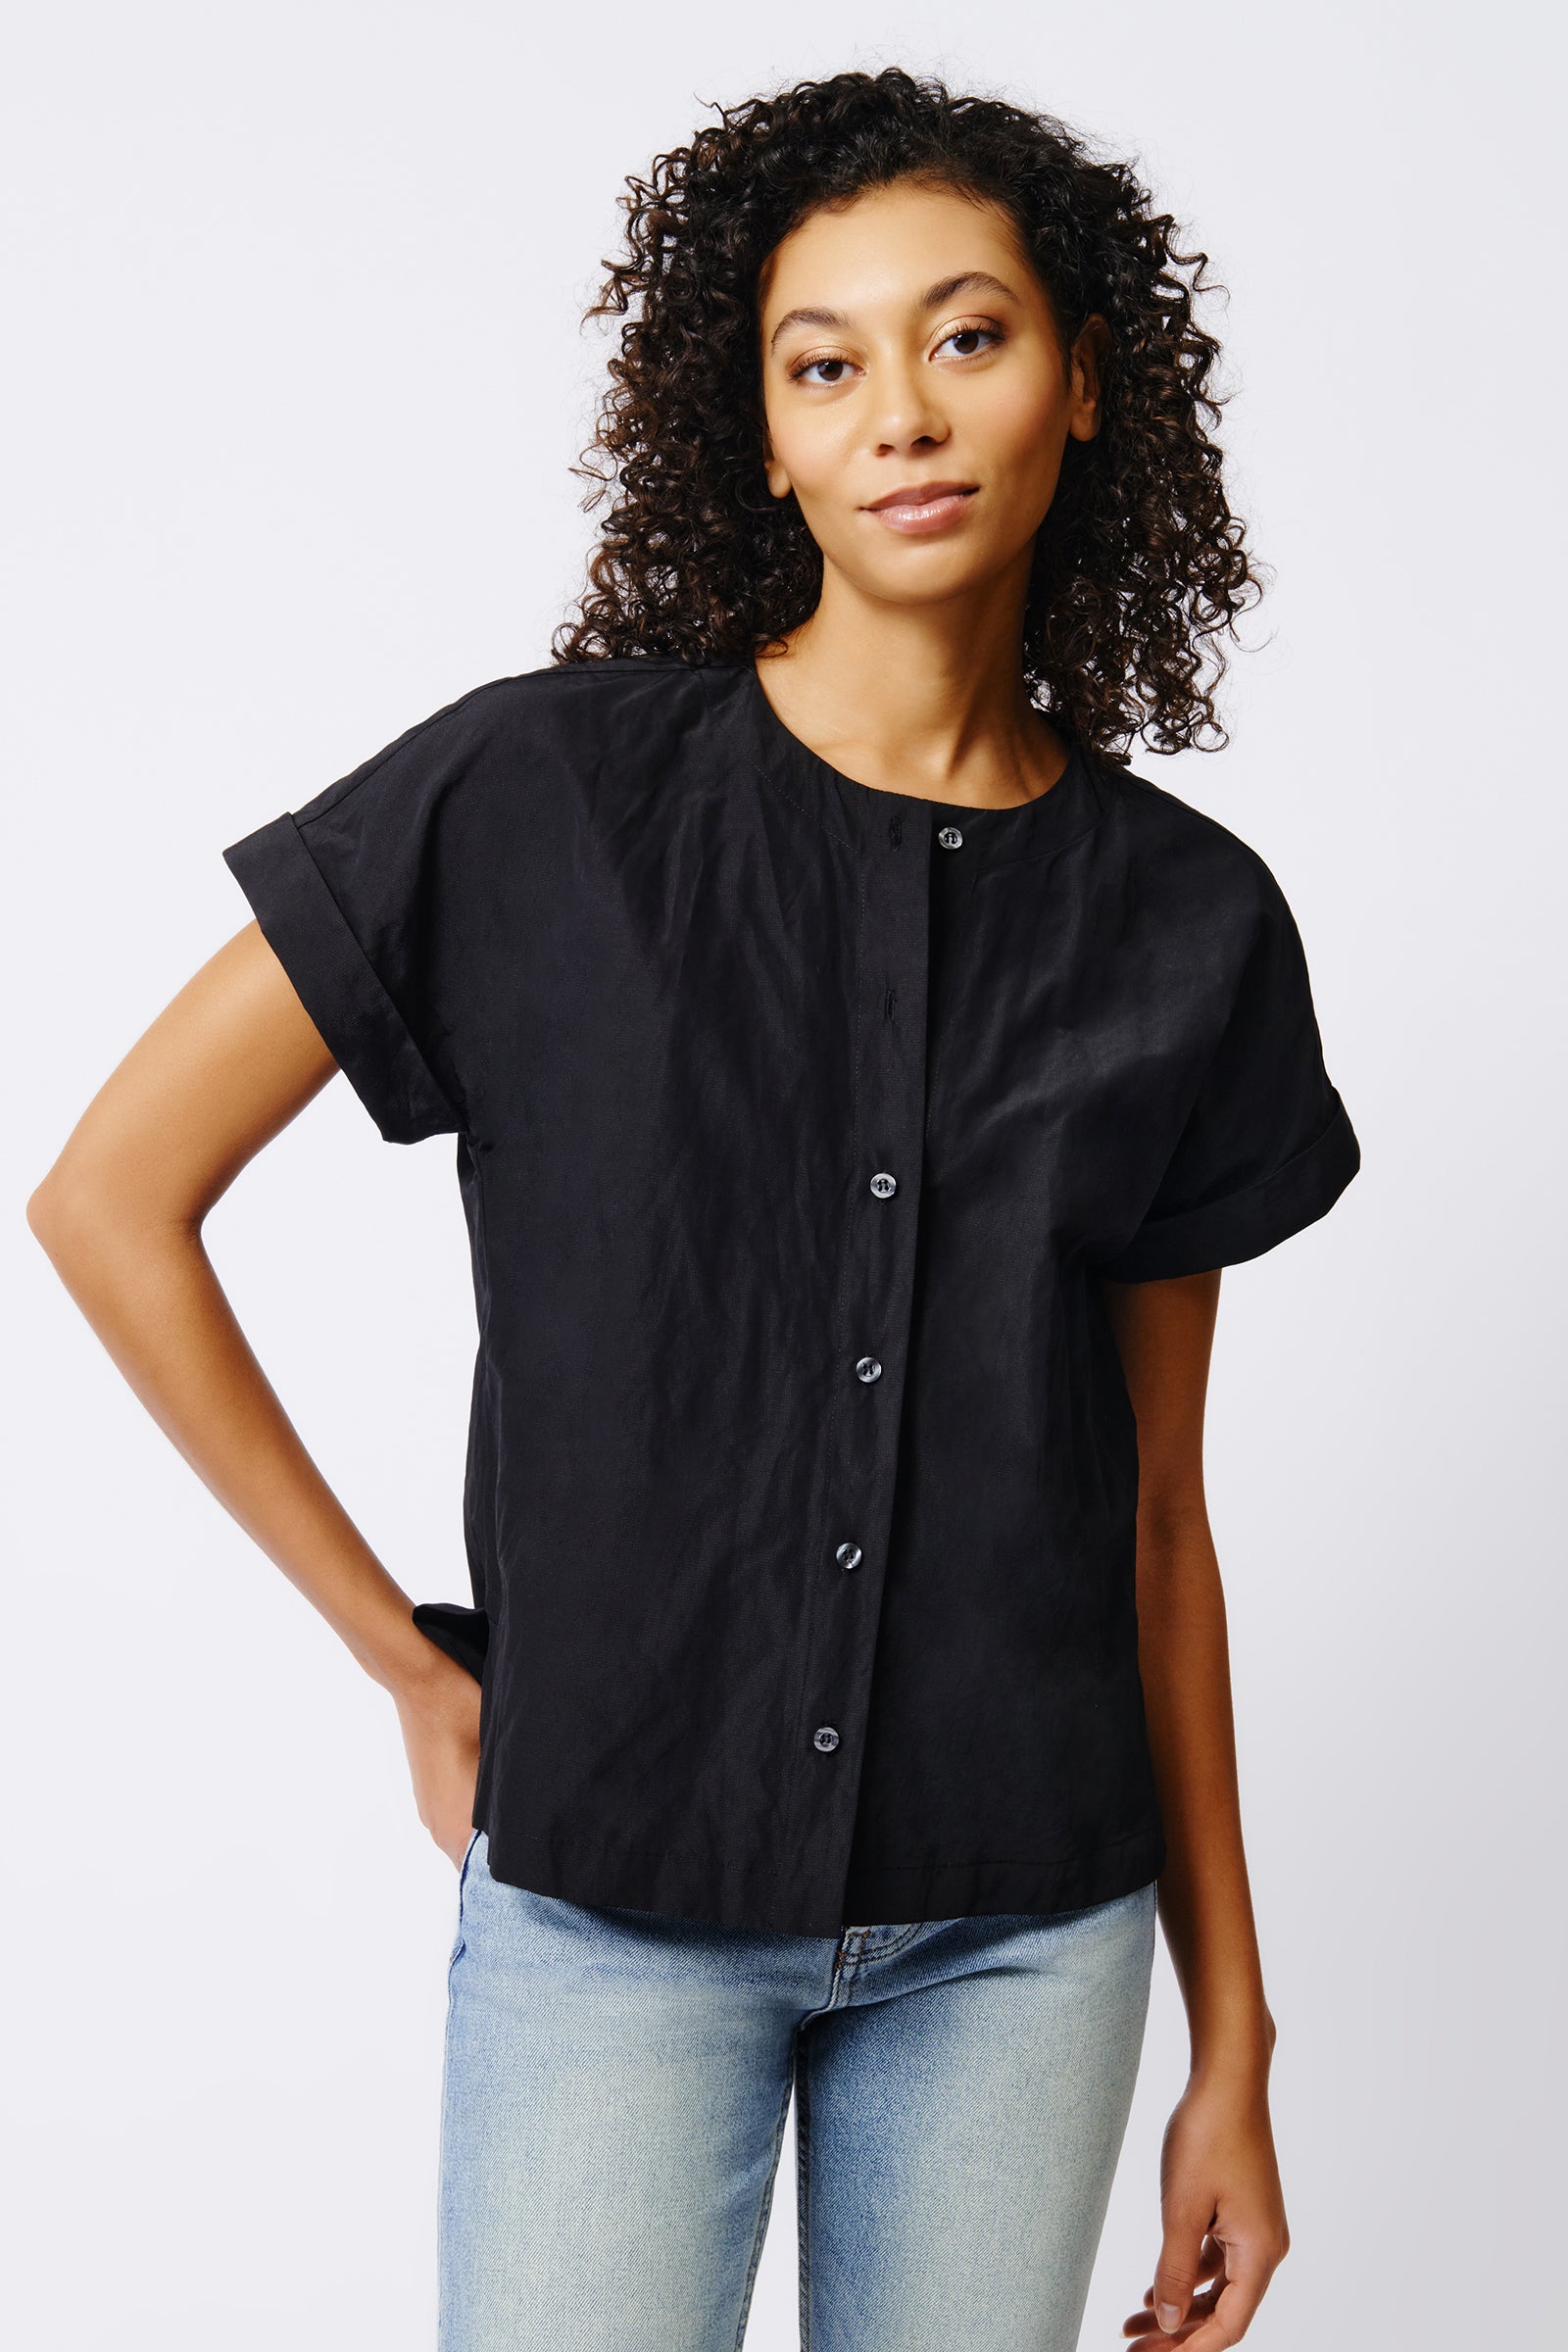 Kal Rieman Natalie Short Sleeve Placket Shirt in Black on Model Front View Crop 3